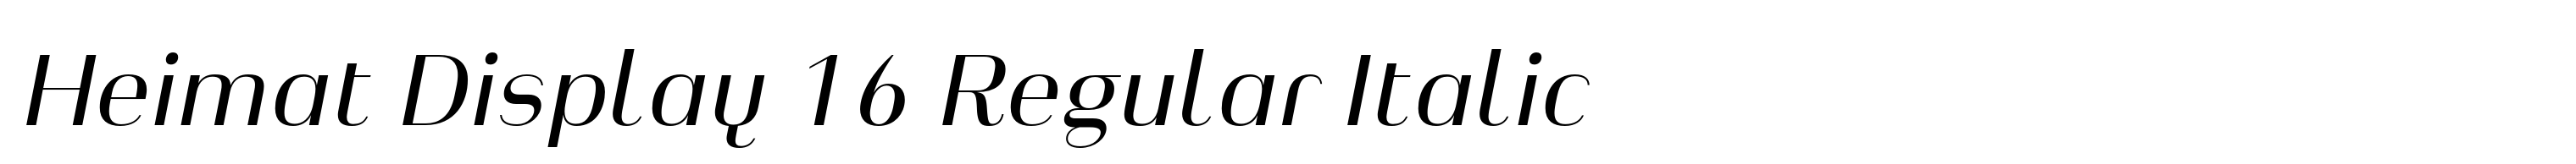 Heimat Display 16 Regular Italic